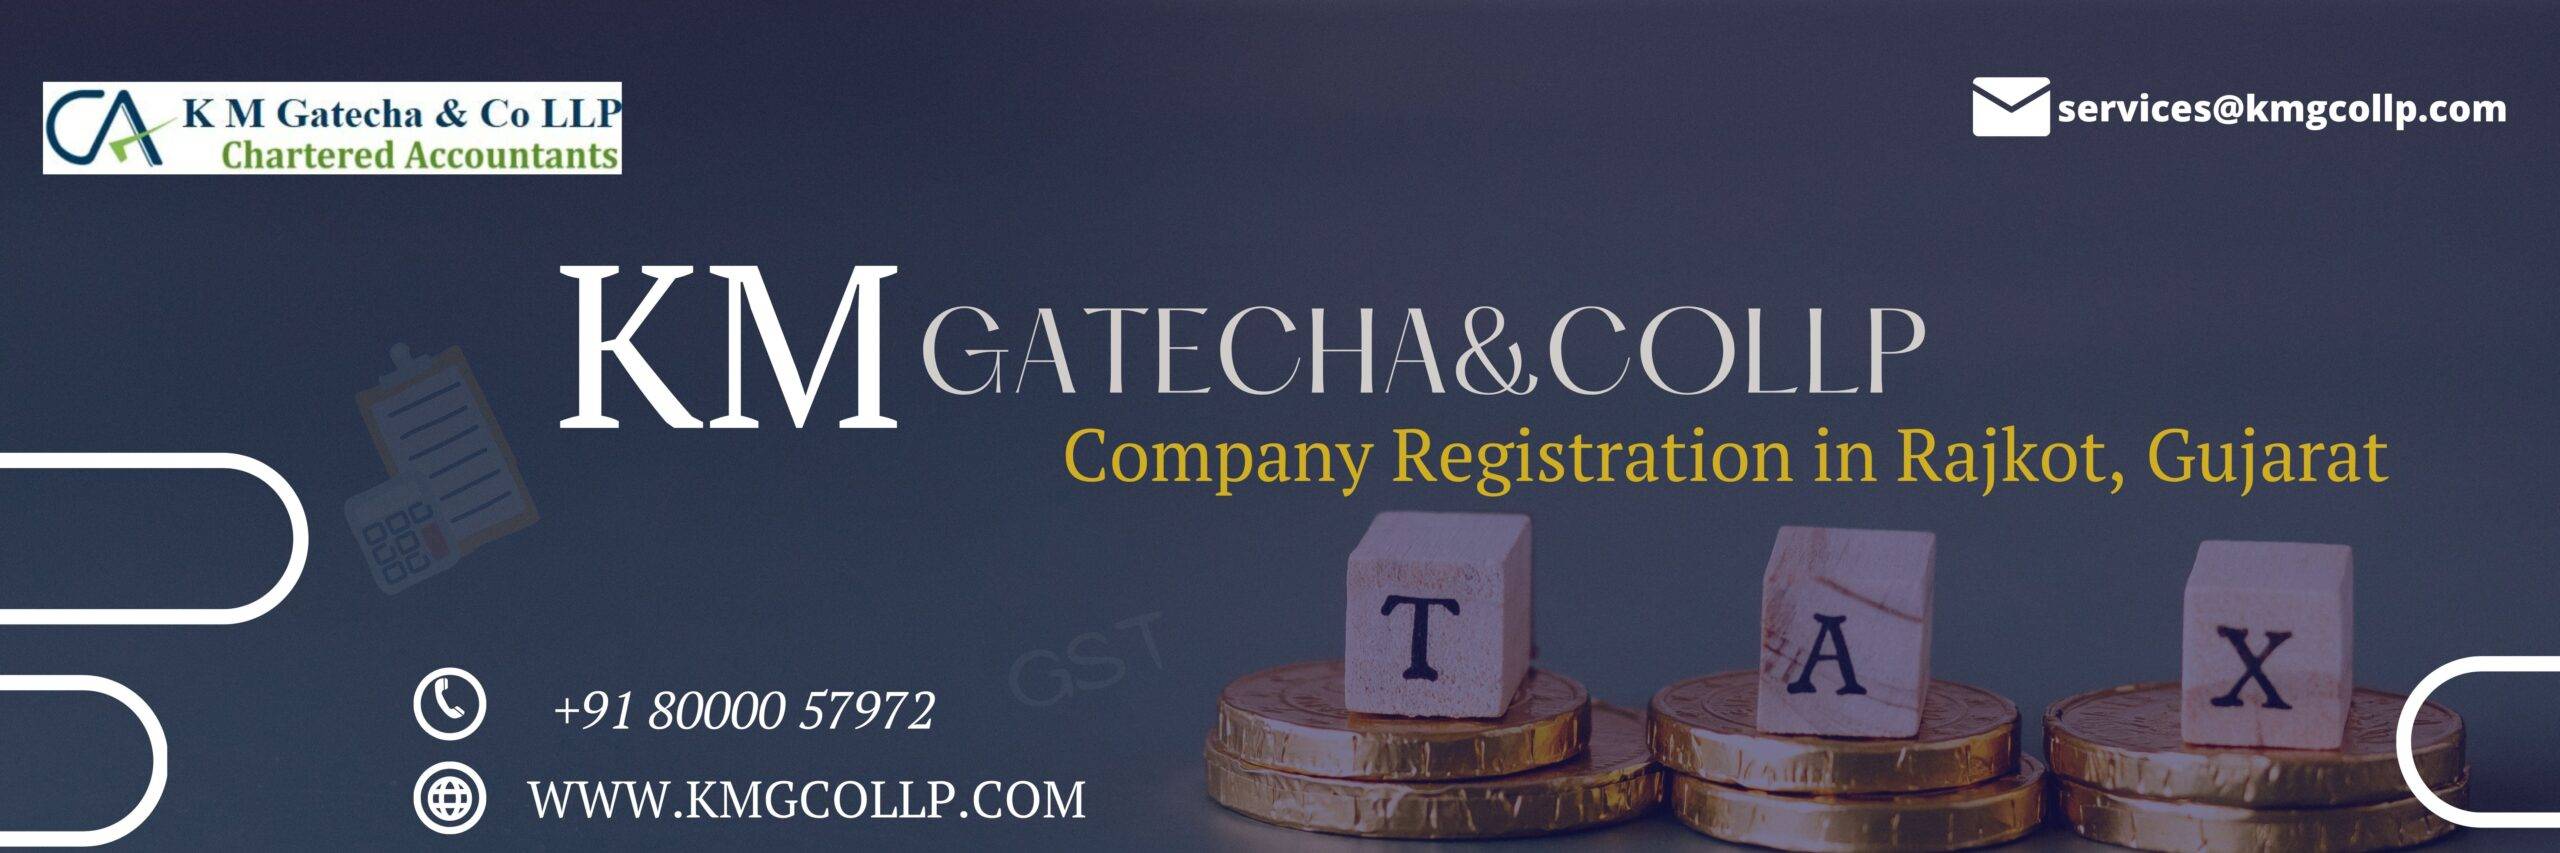 Company registration in Rajkot, Gujarat